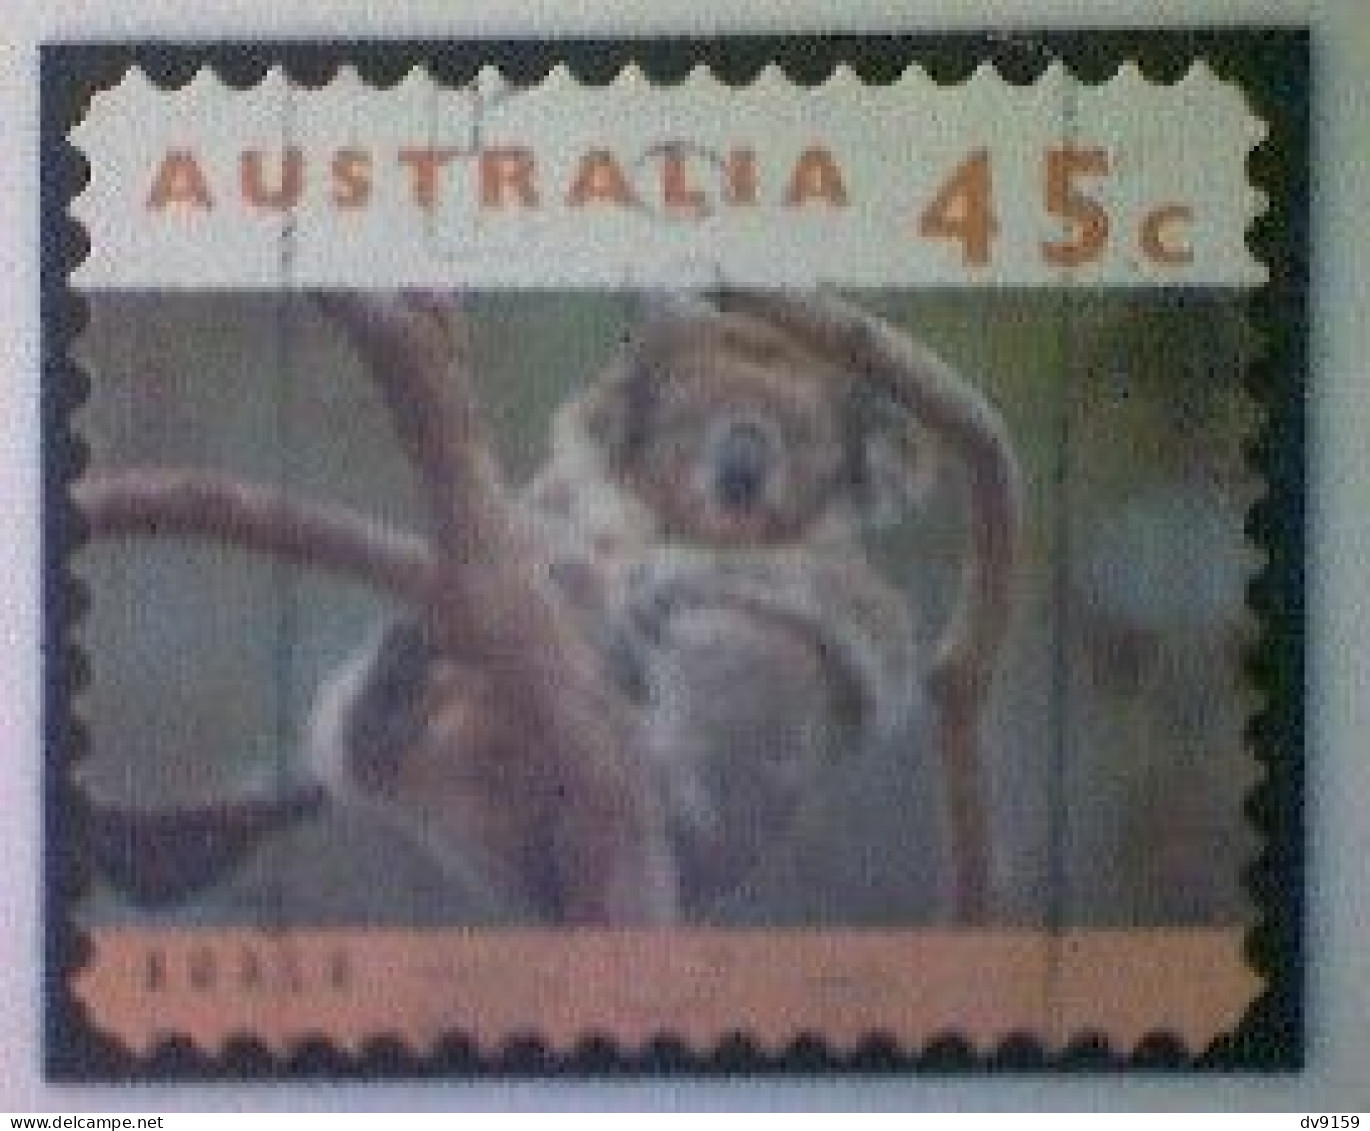 Australia, Scott #1293, Used (o), 1994, Wildlife Series, Koala Sleeping, 45¢, Orange And Multicolored - Usati